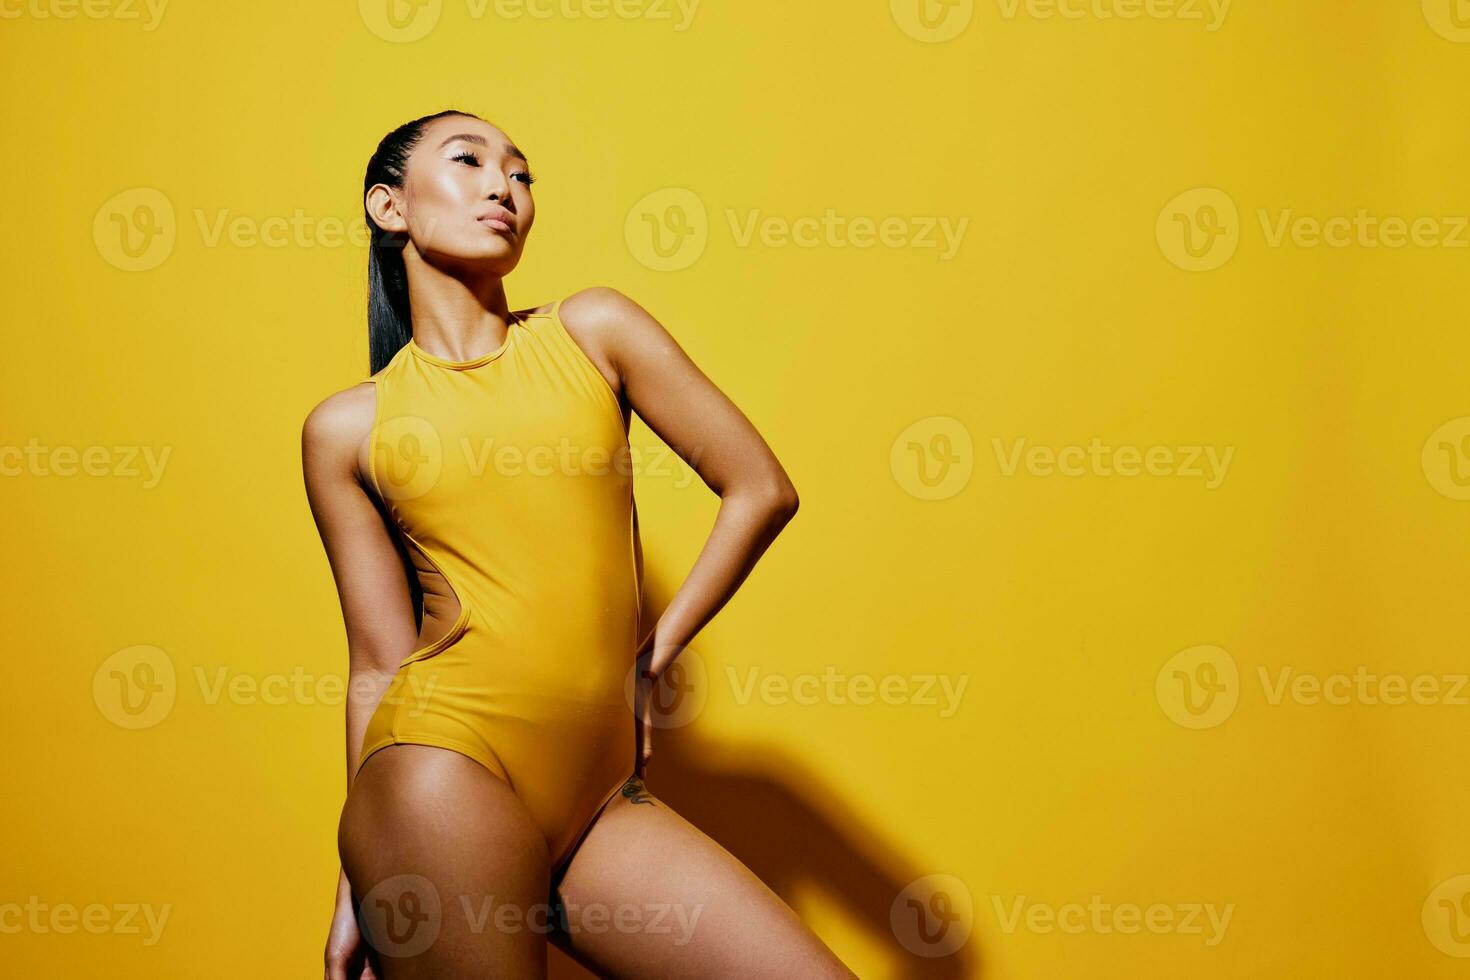 vrouw glimlach studio zomer persoon schoonheid zwempak mode zwart geel portret modieus verrast foto